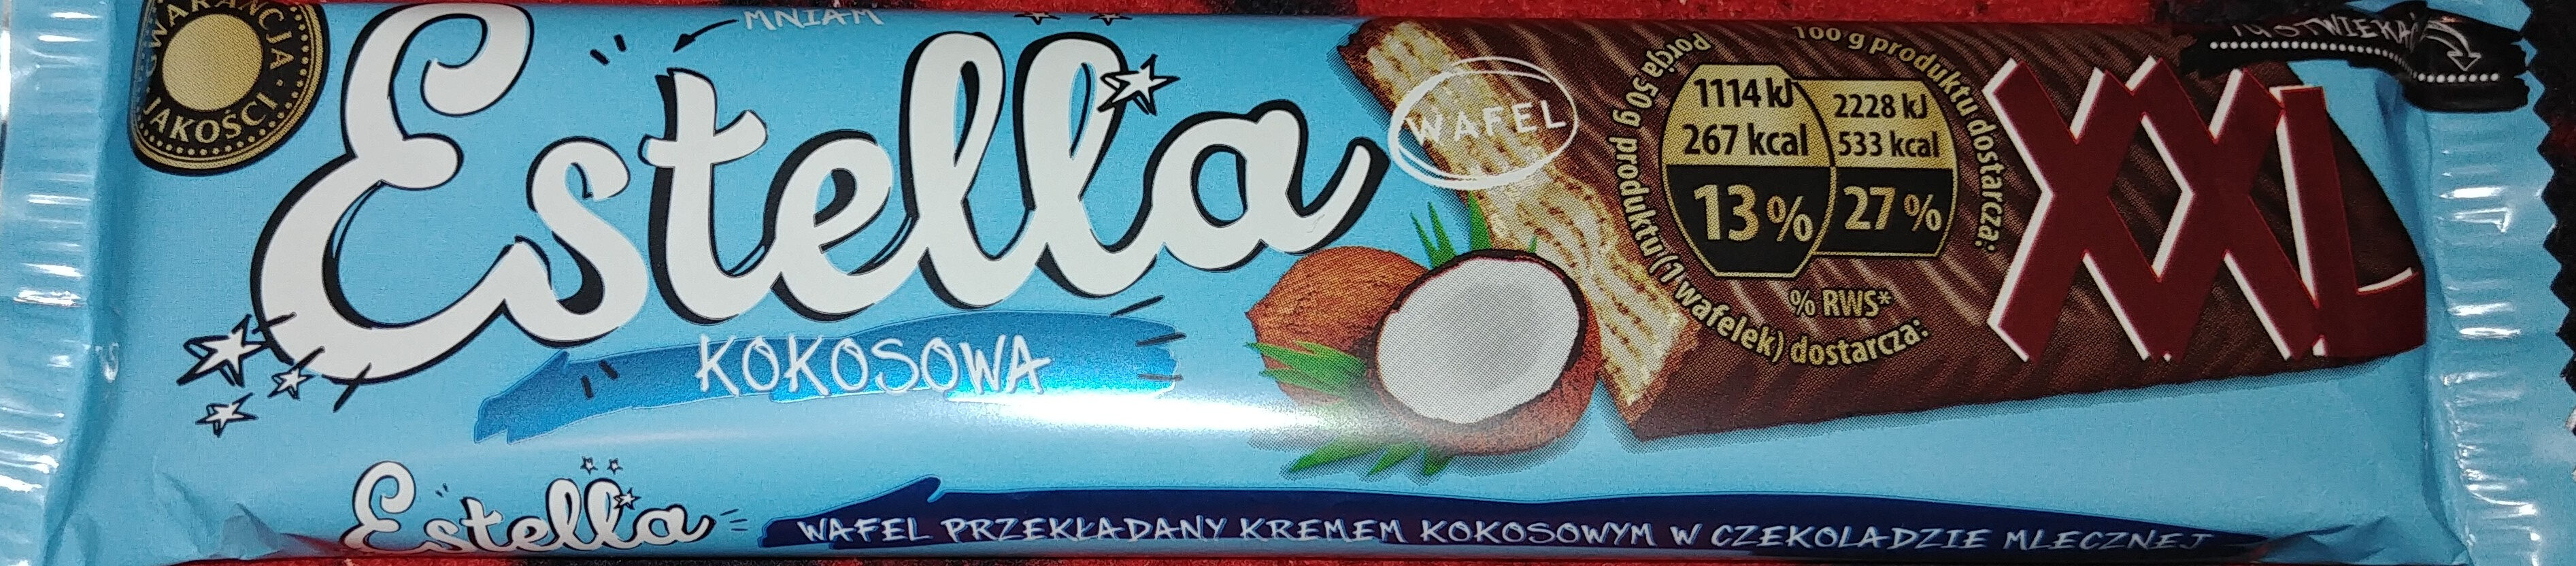 Estella kokosowa - Product - pl